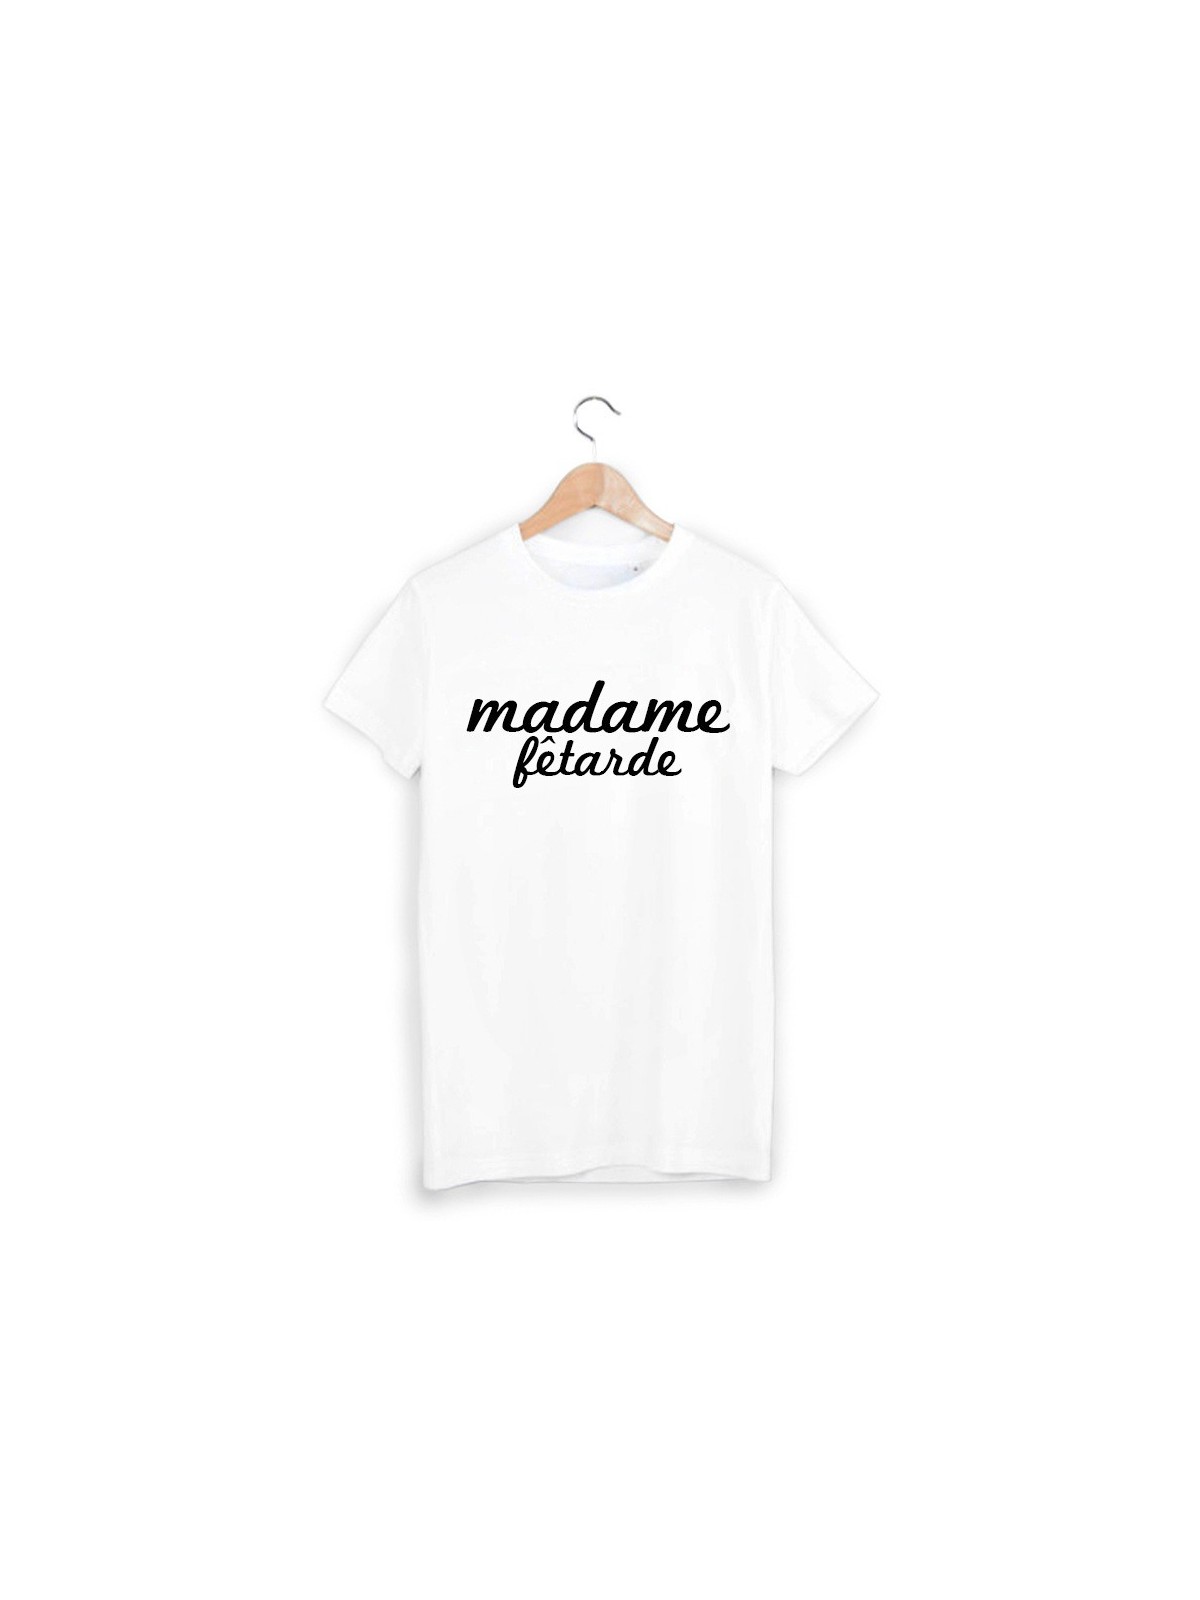 T-Shirt madame fÃªtarde ref 1035